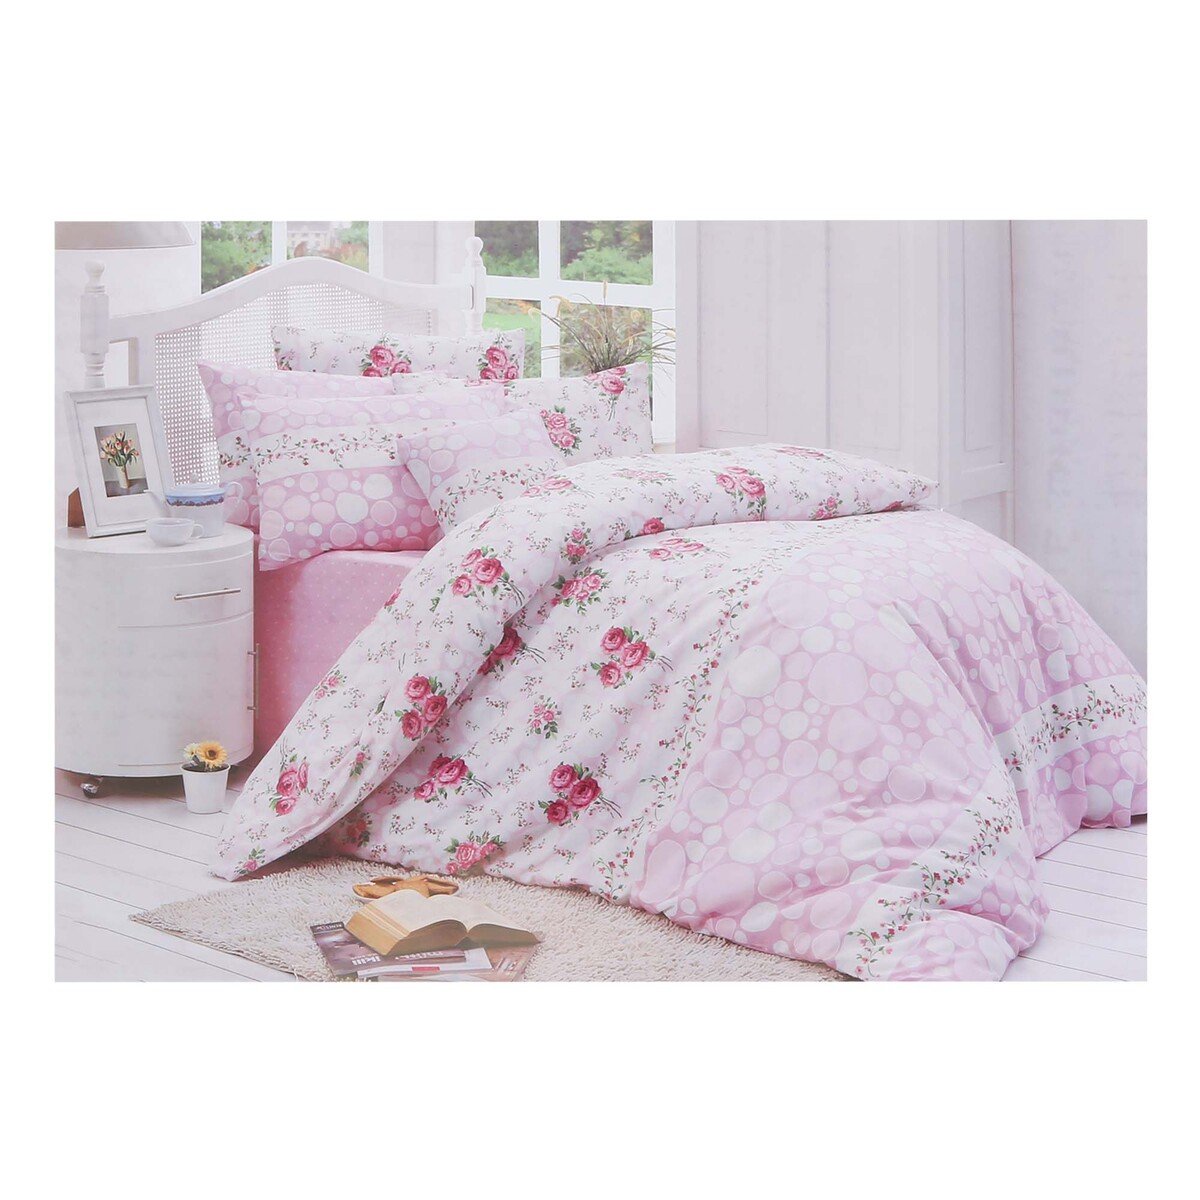 Cortigiani Comforter Set 6pcs 235x260cm Assorted Colors & Designs